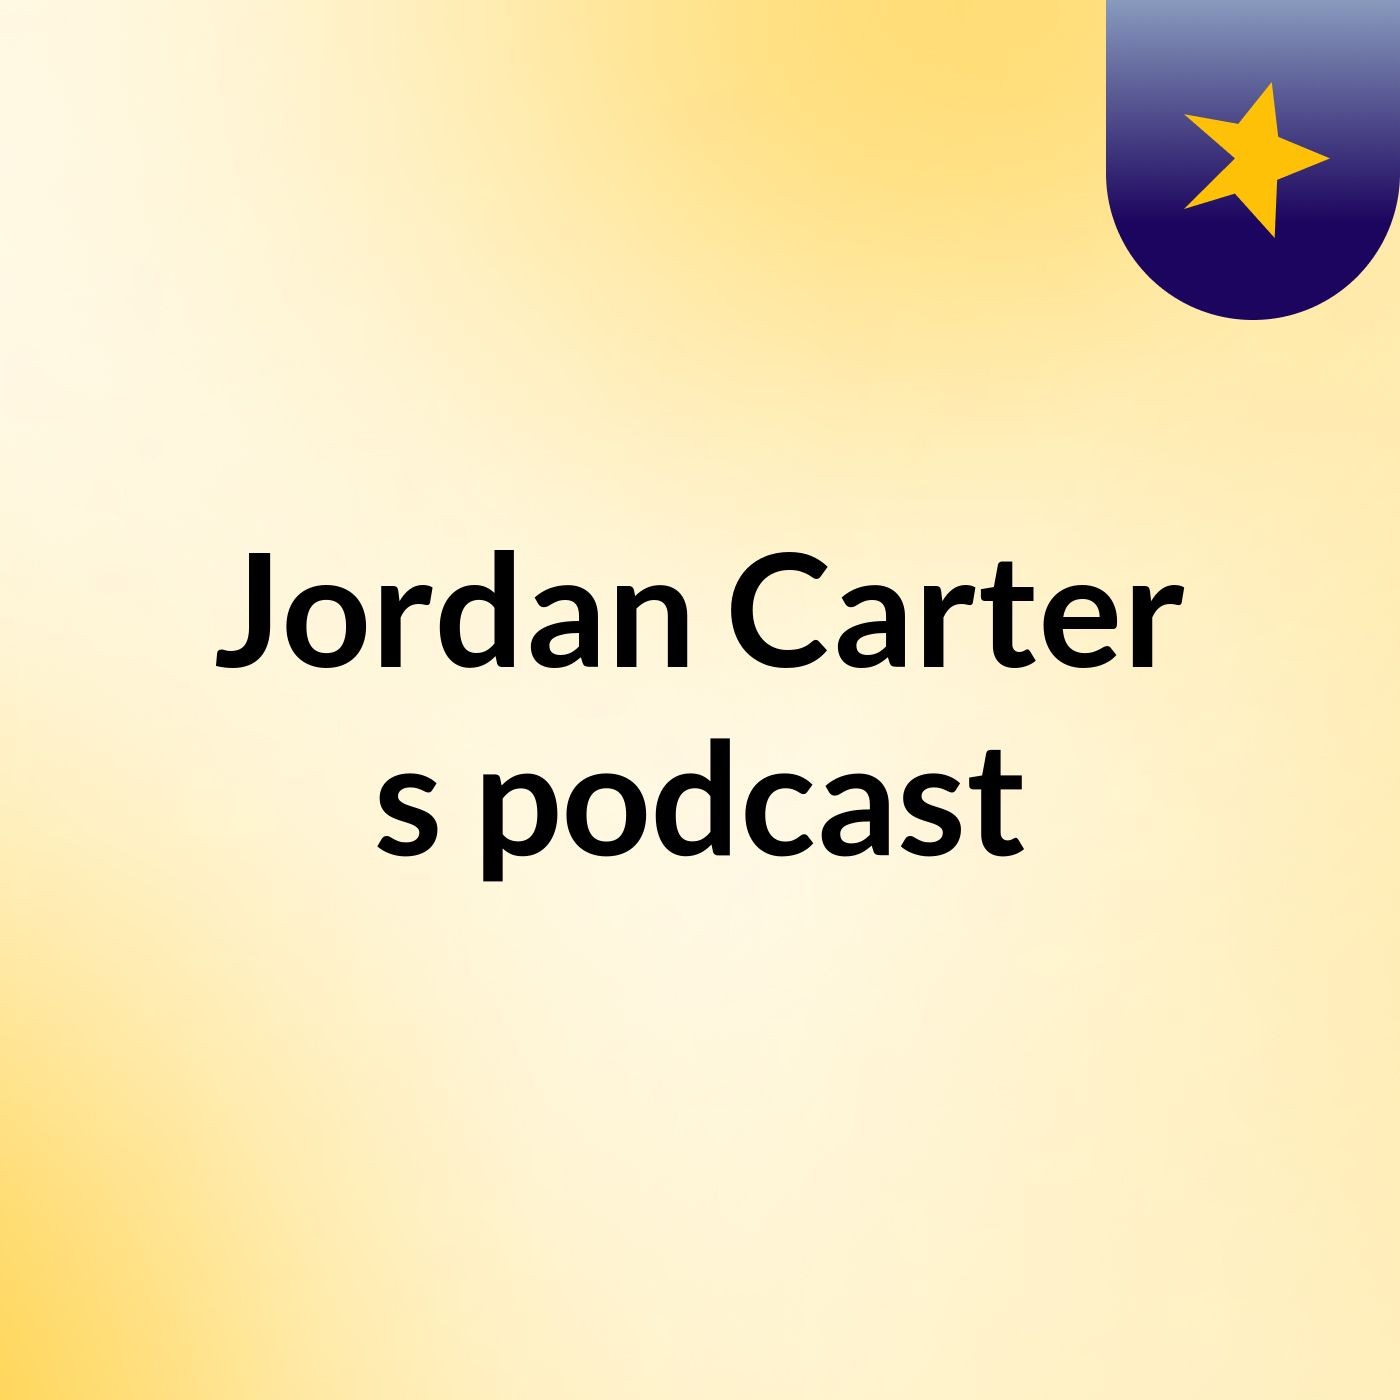 Episode 2 - Jordan Carter's podcast